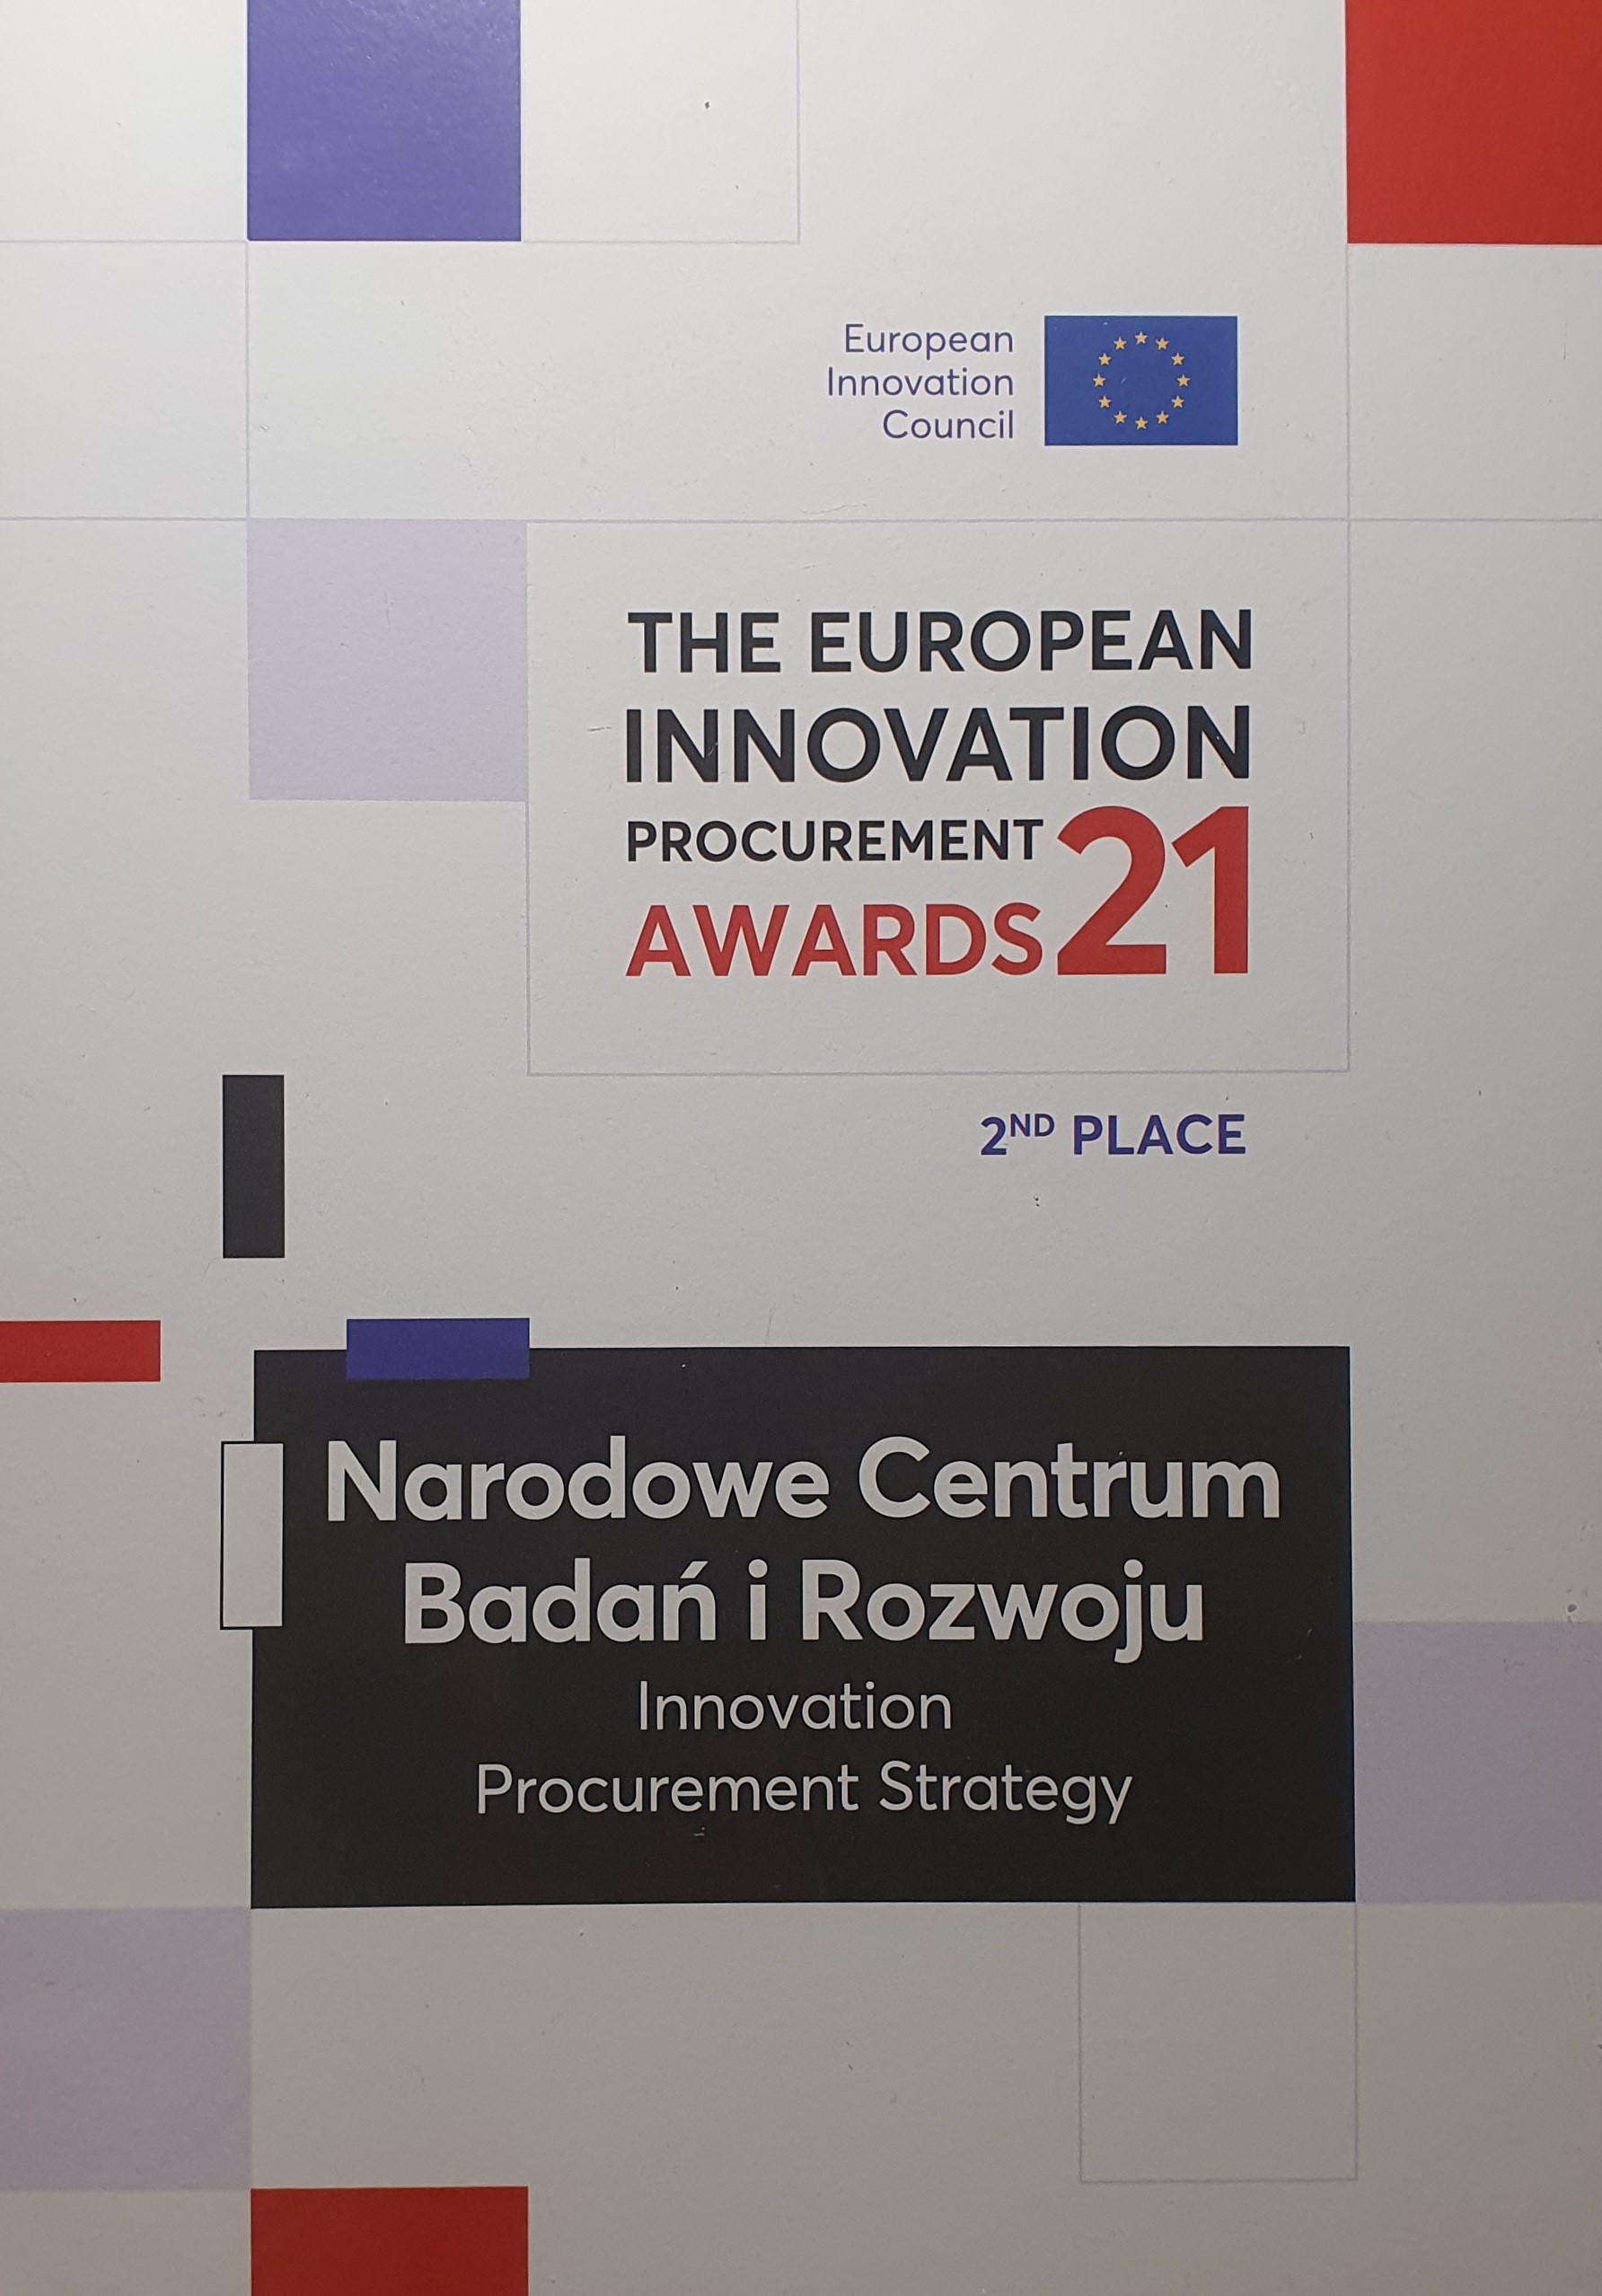 The European innovation Procurement Awards 21